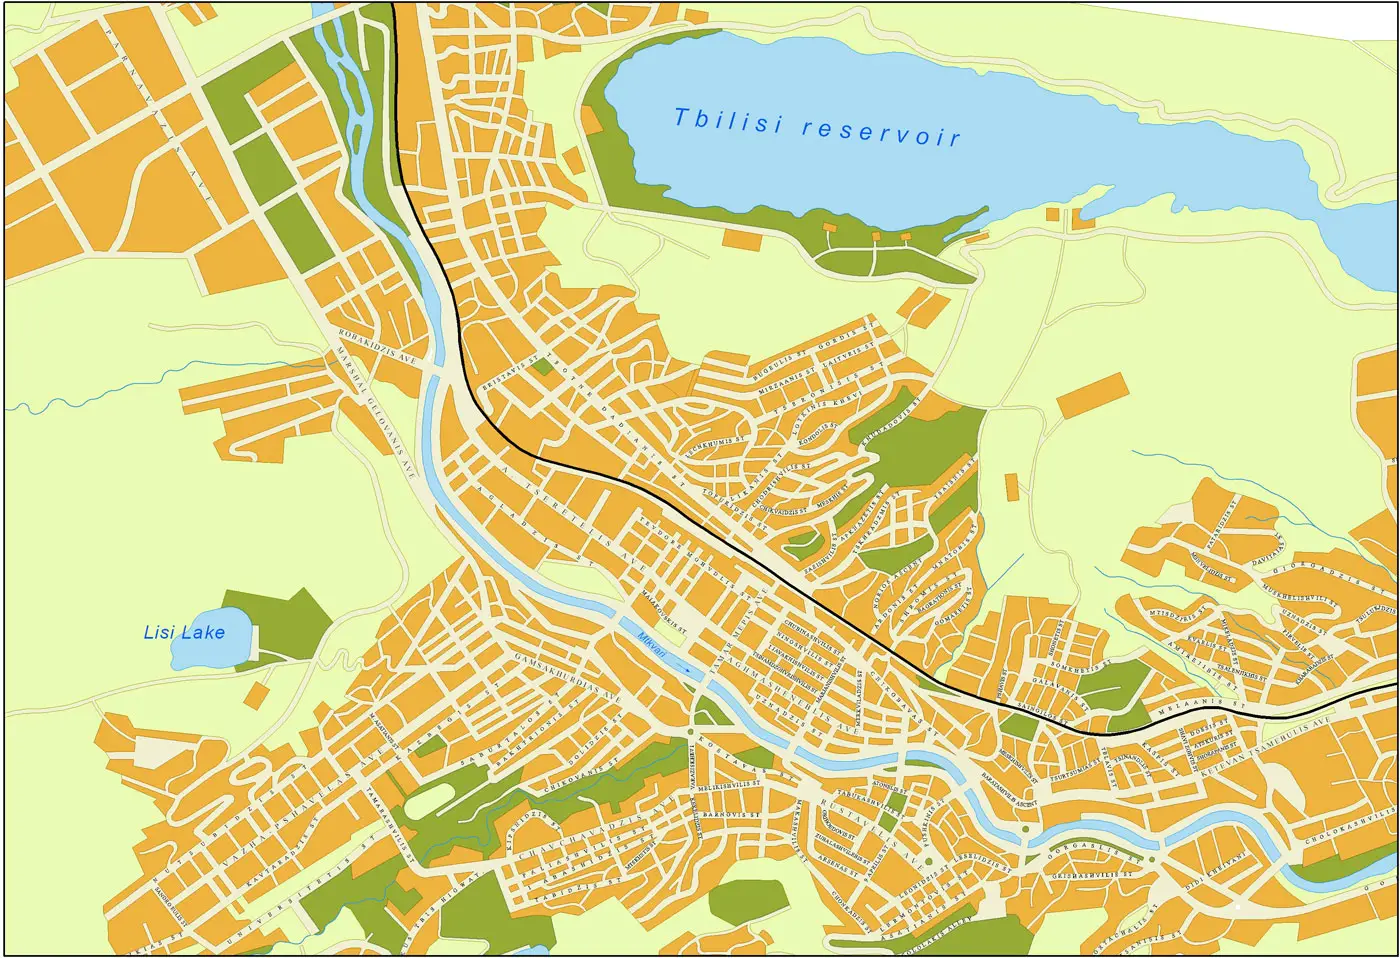 tbilisi tourist map pdf